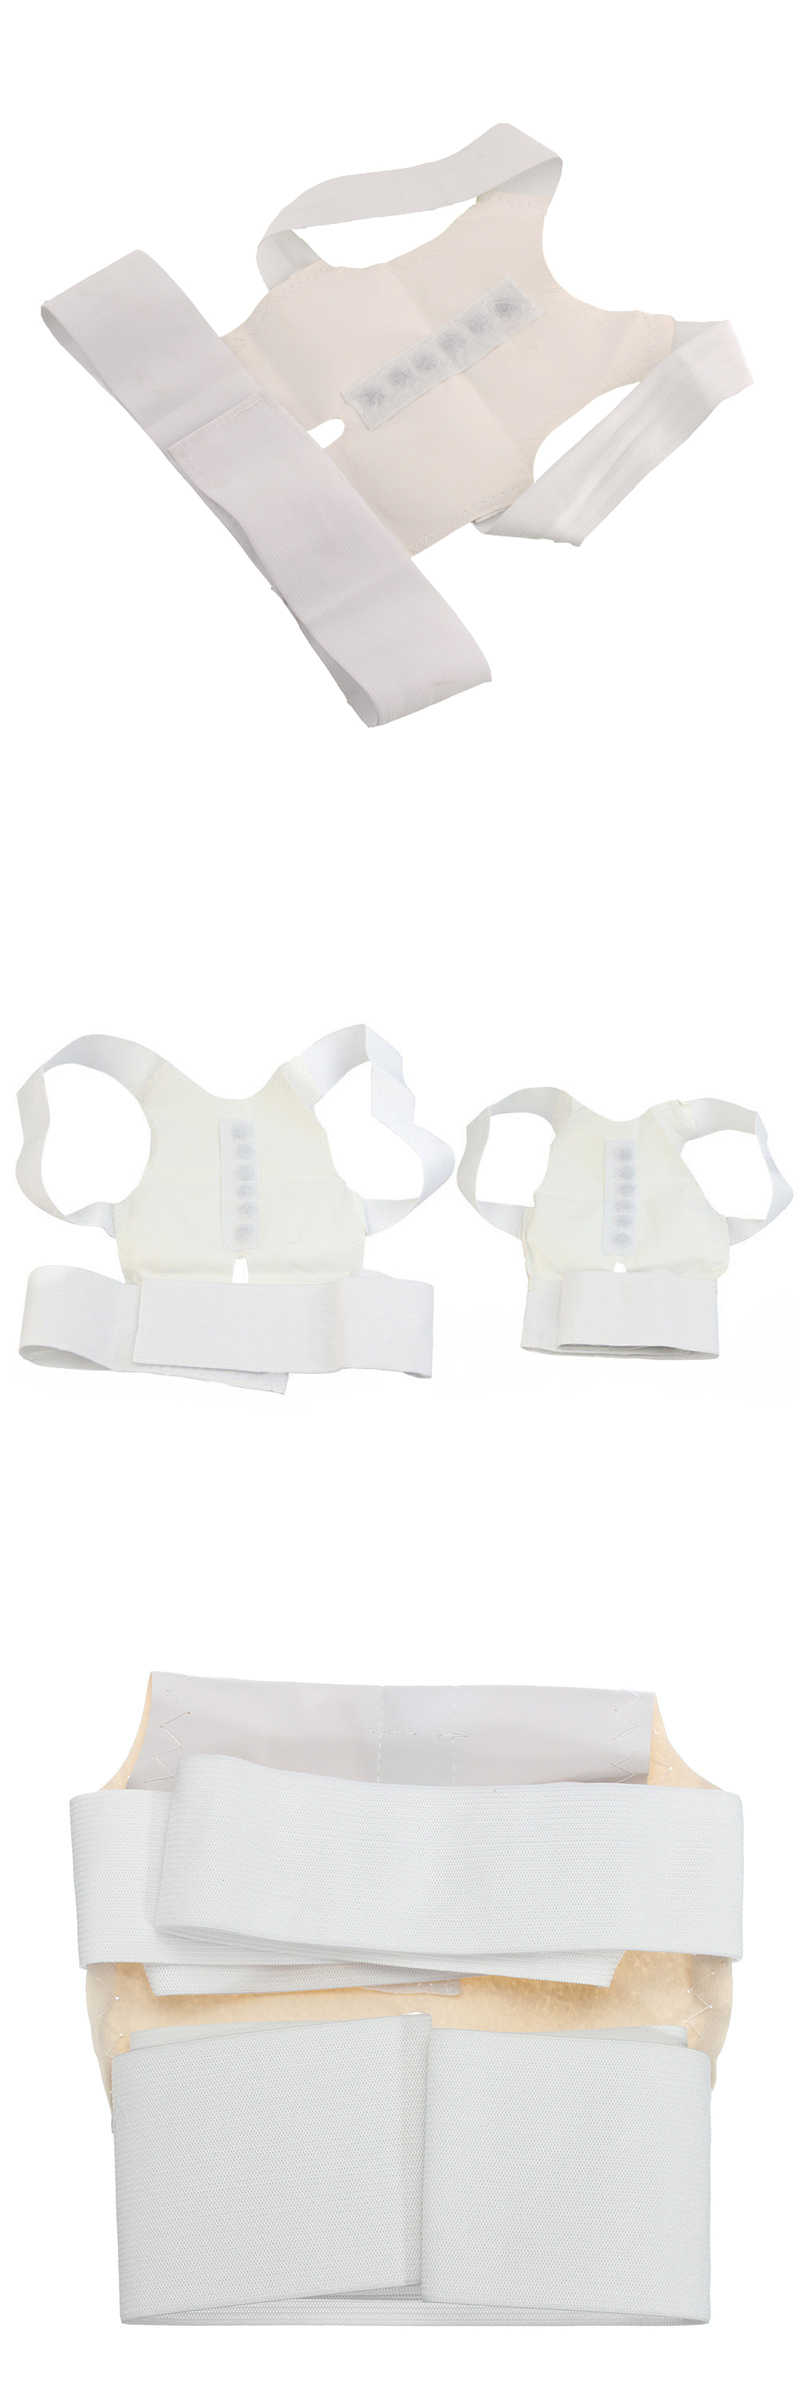 1PC-Back-Straighten-Belt-Correct-Posture-Vest-Health-Corrective-Tape-Back-Support-Braces-1199536-2